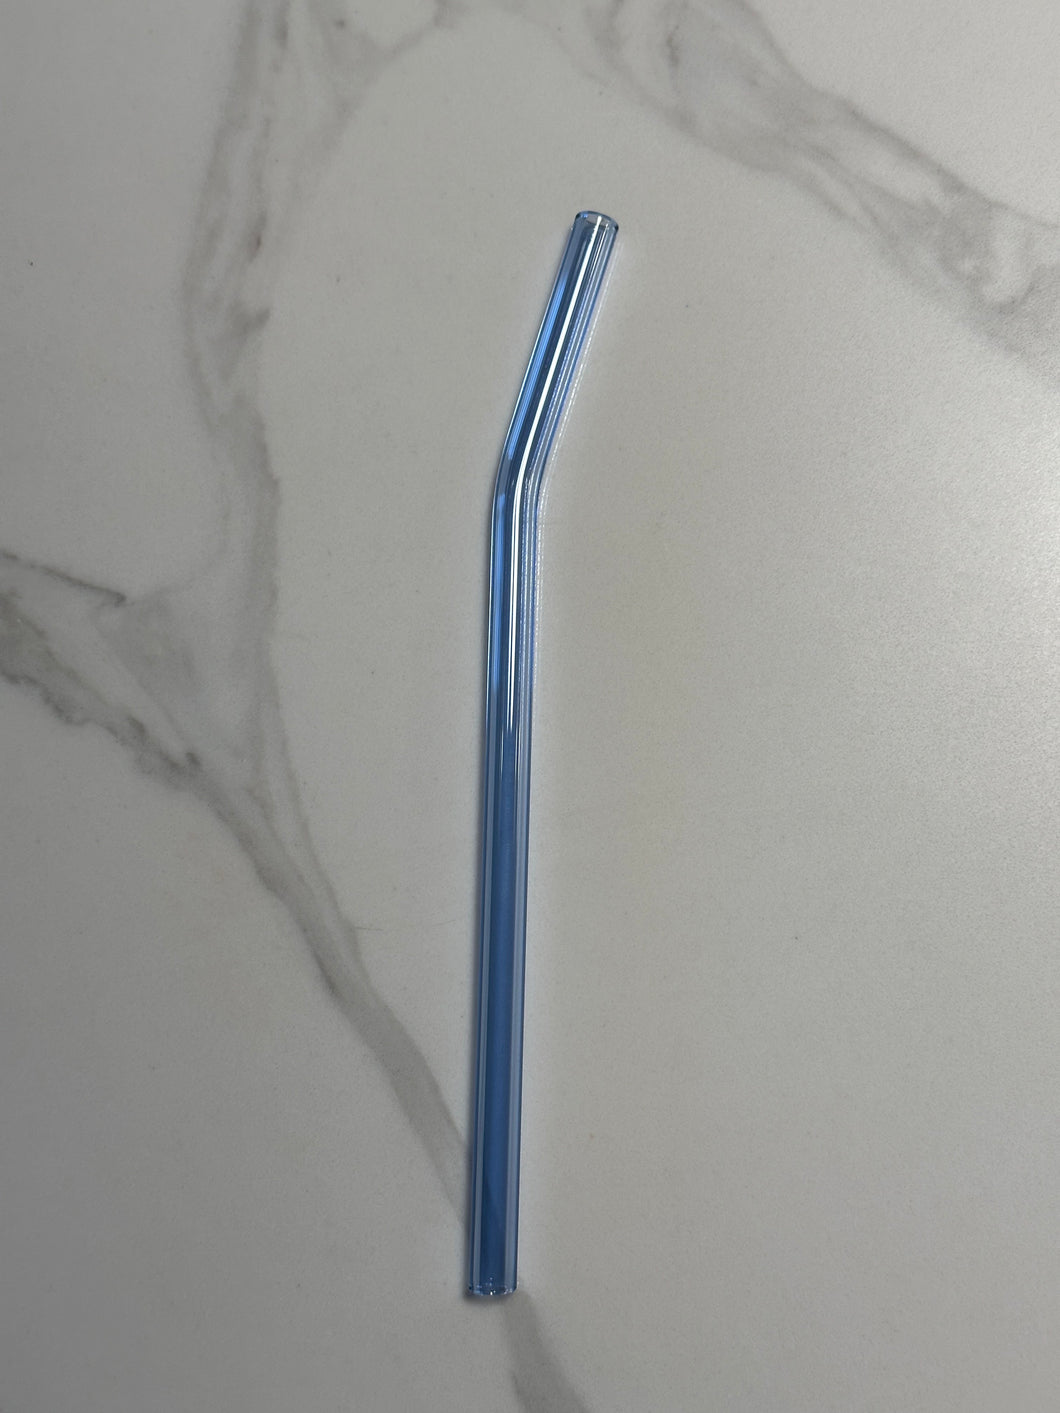 Bent Light Blue Glass Straw